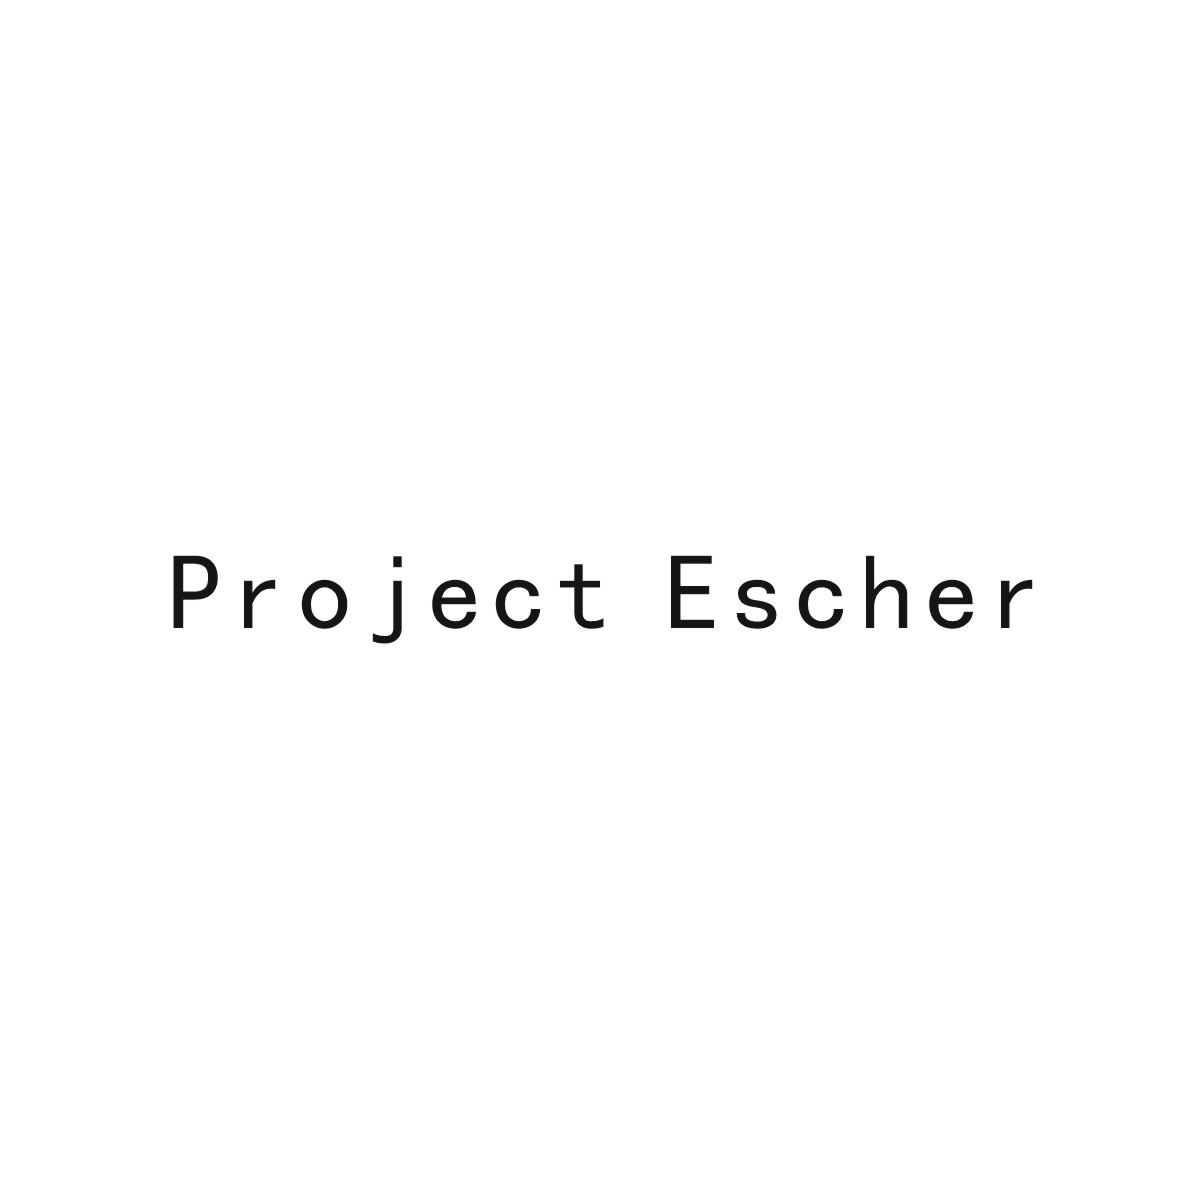 PROJECT ESCHER电池机械商标转让费用买卖交易流程